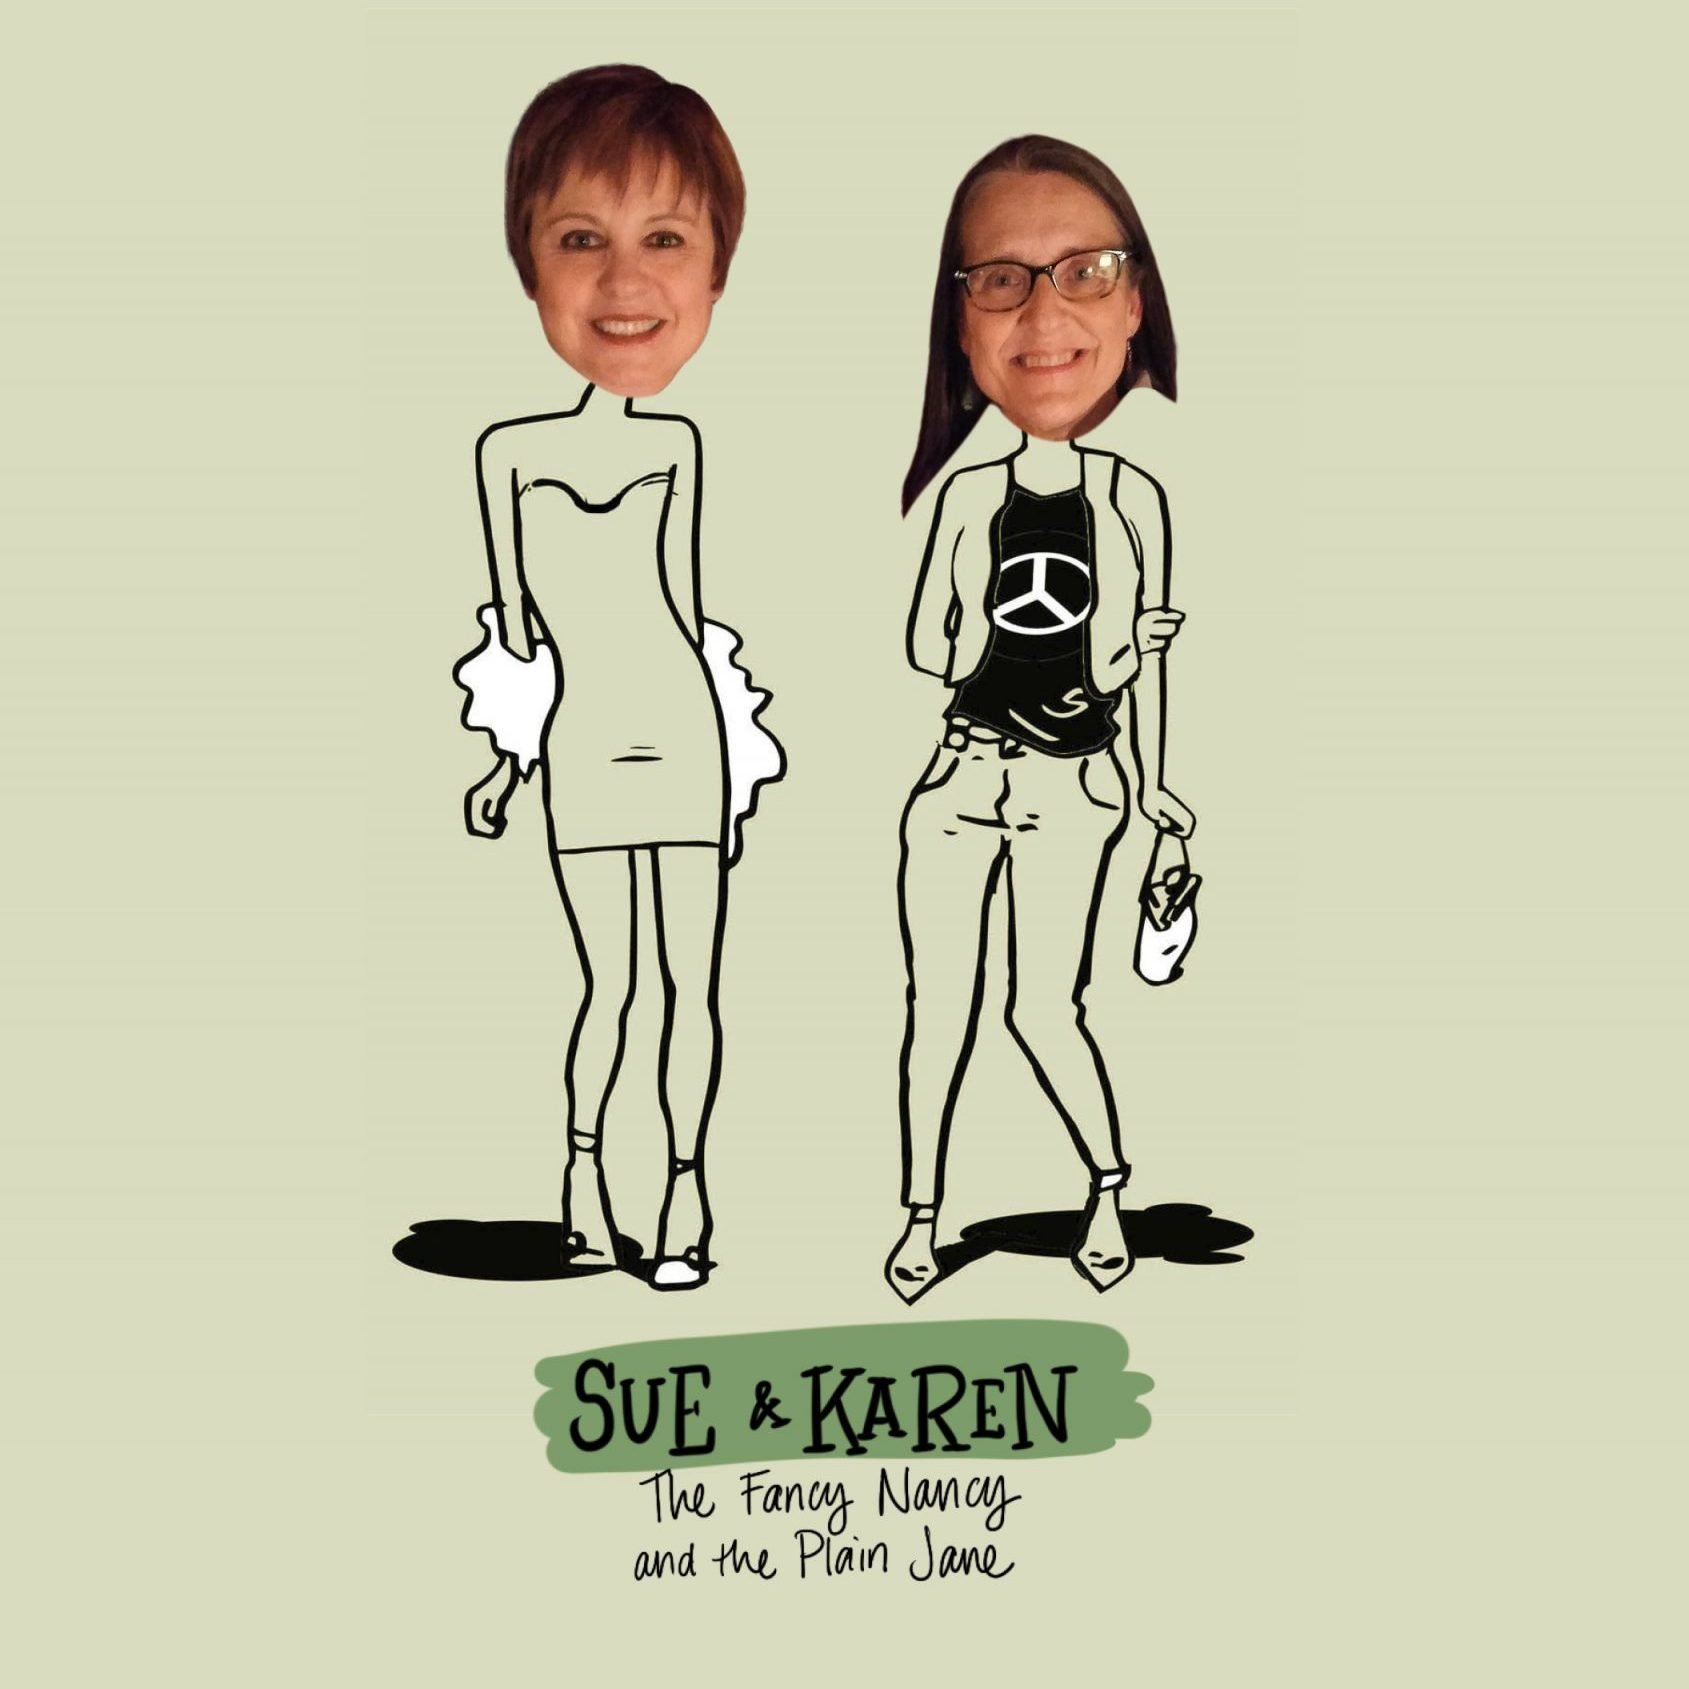 Sue & Karen